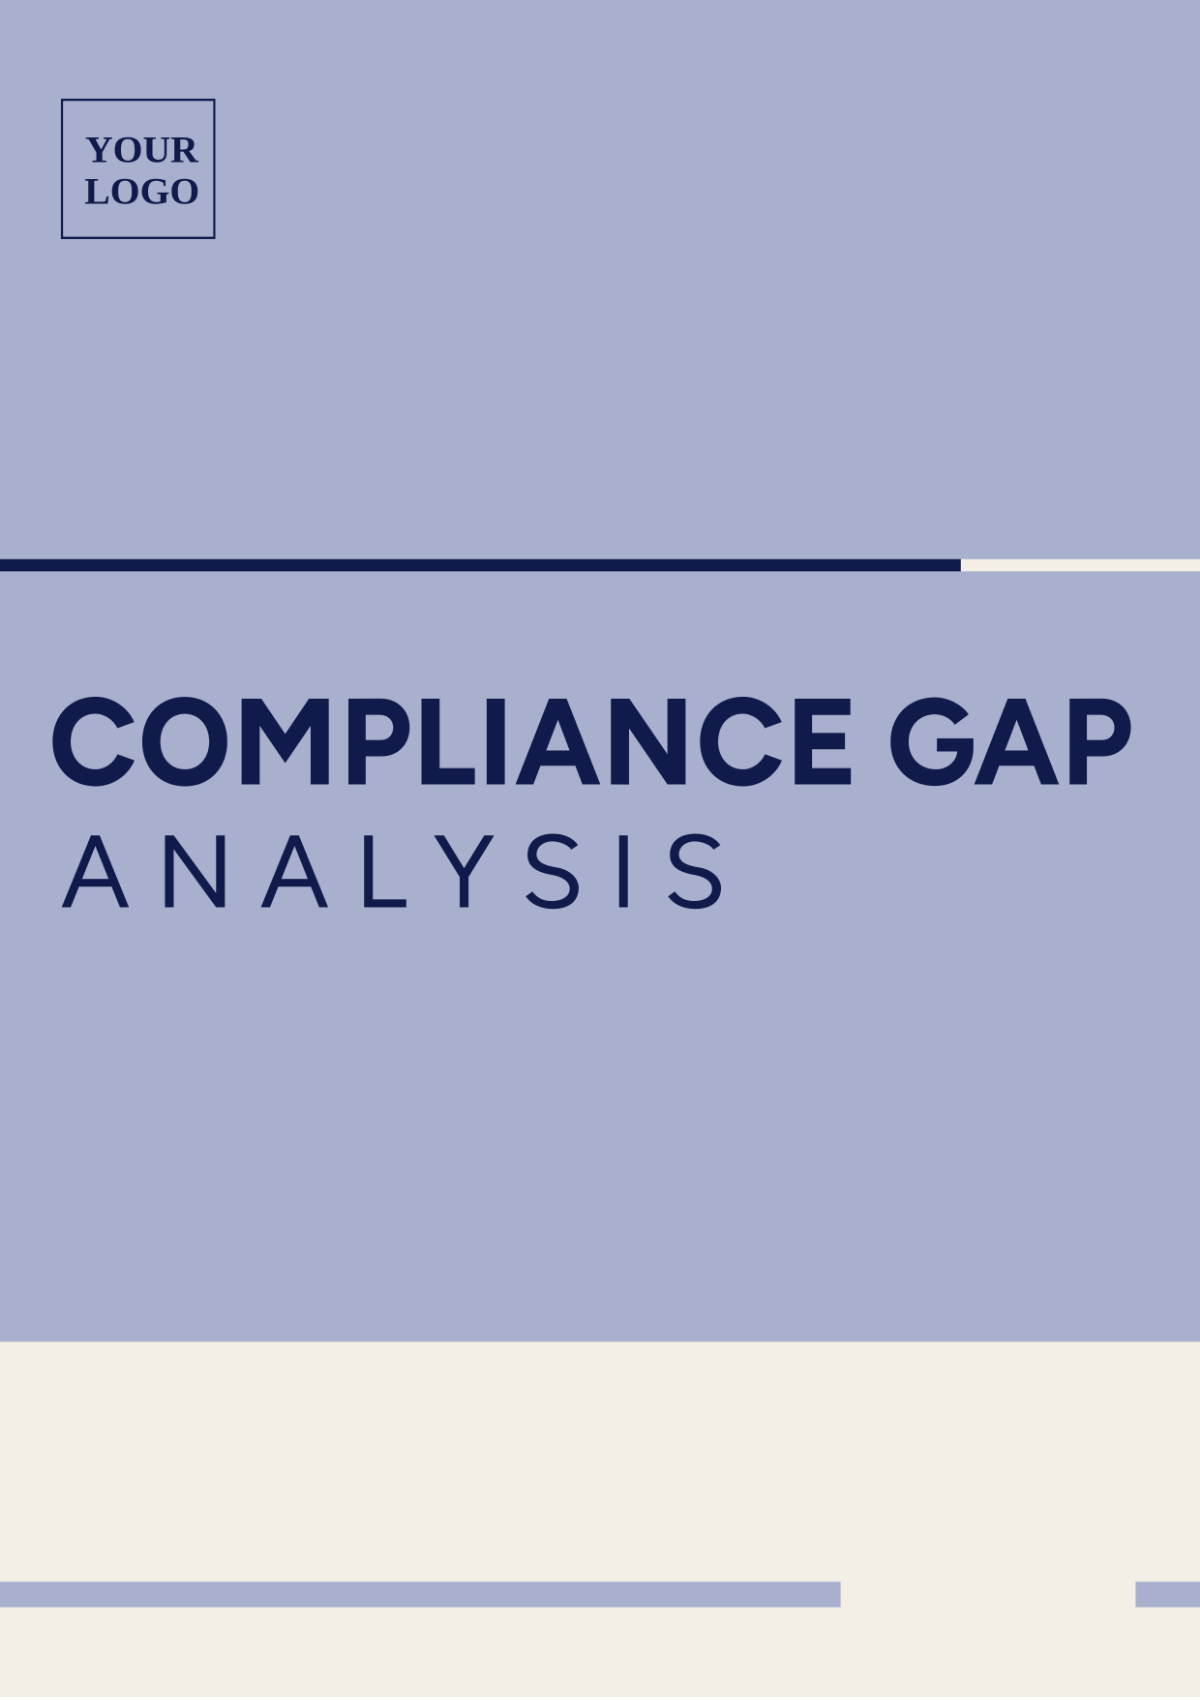 Compliance Gap Analysis Template